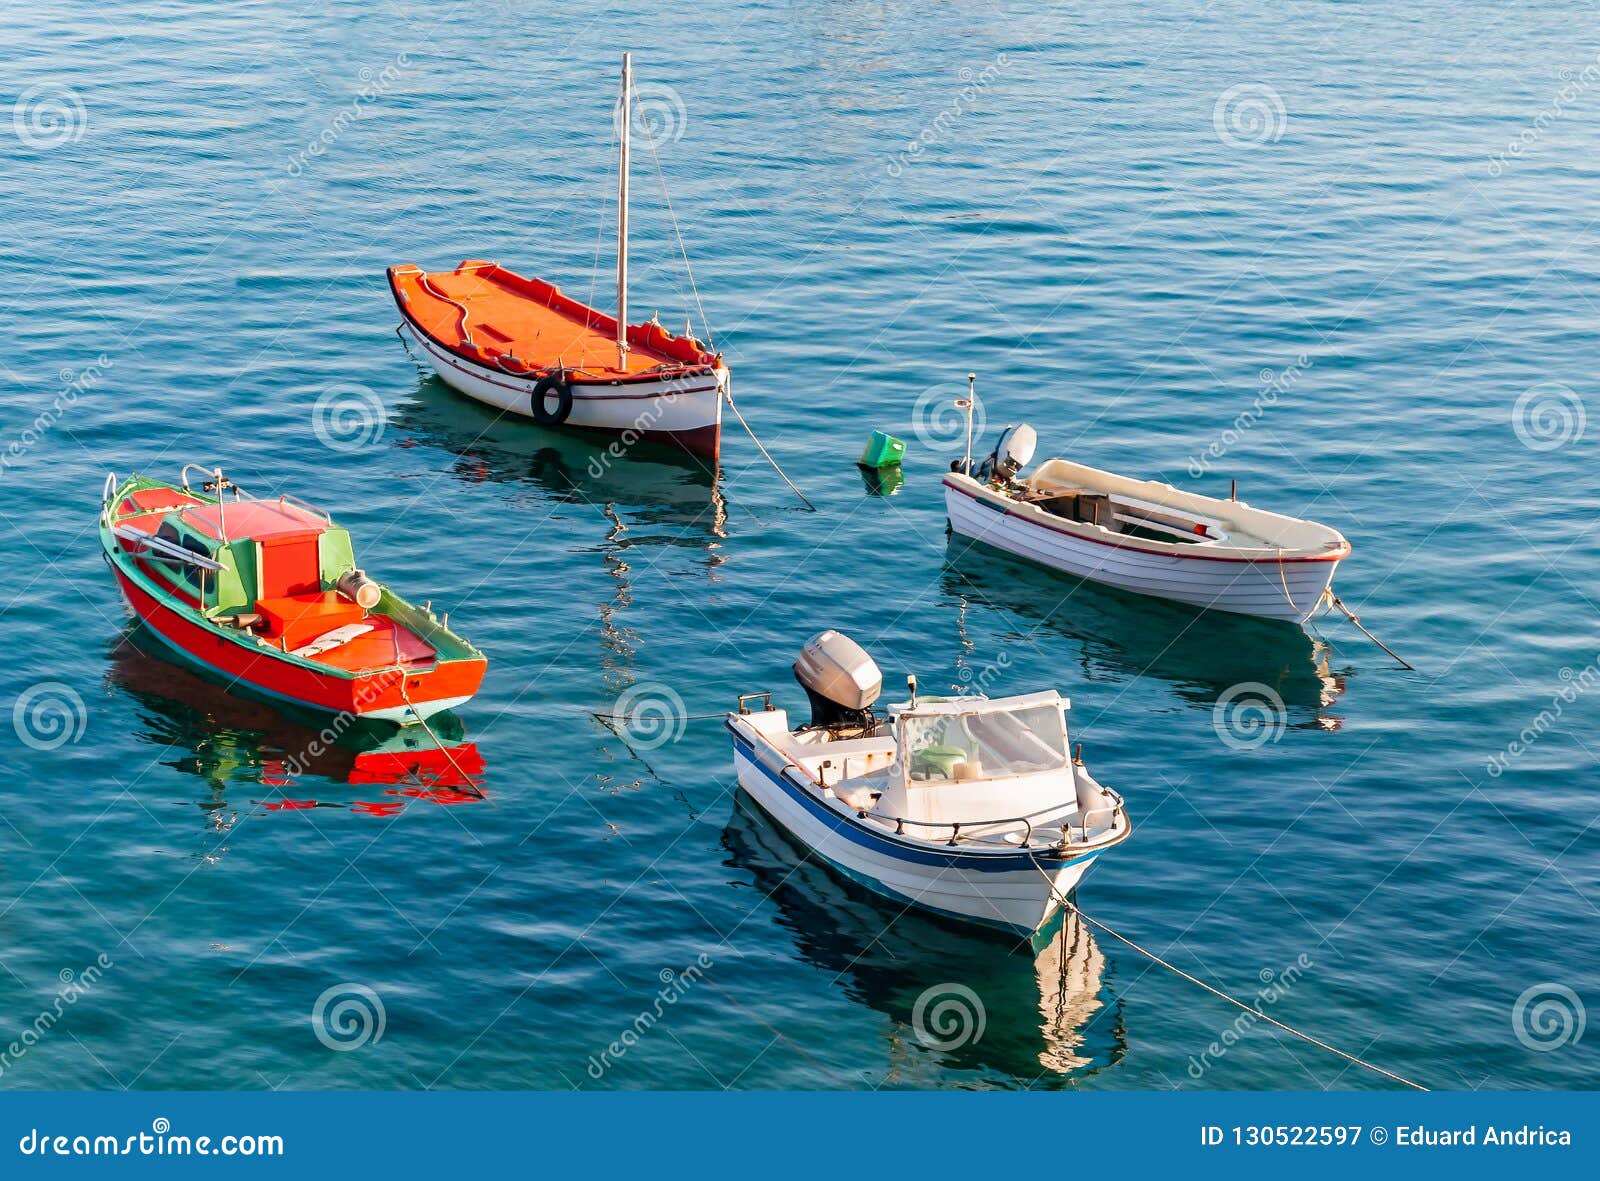 Fishermen toys stock image. Image of fishermen, oars - 130522597